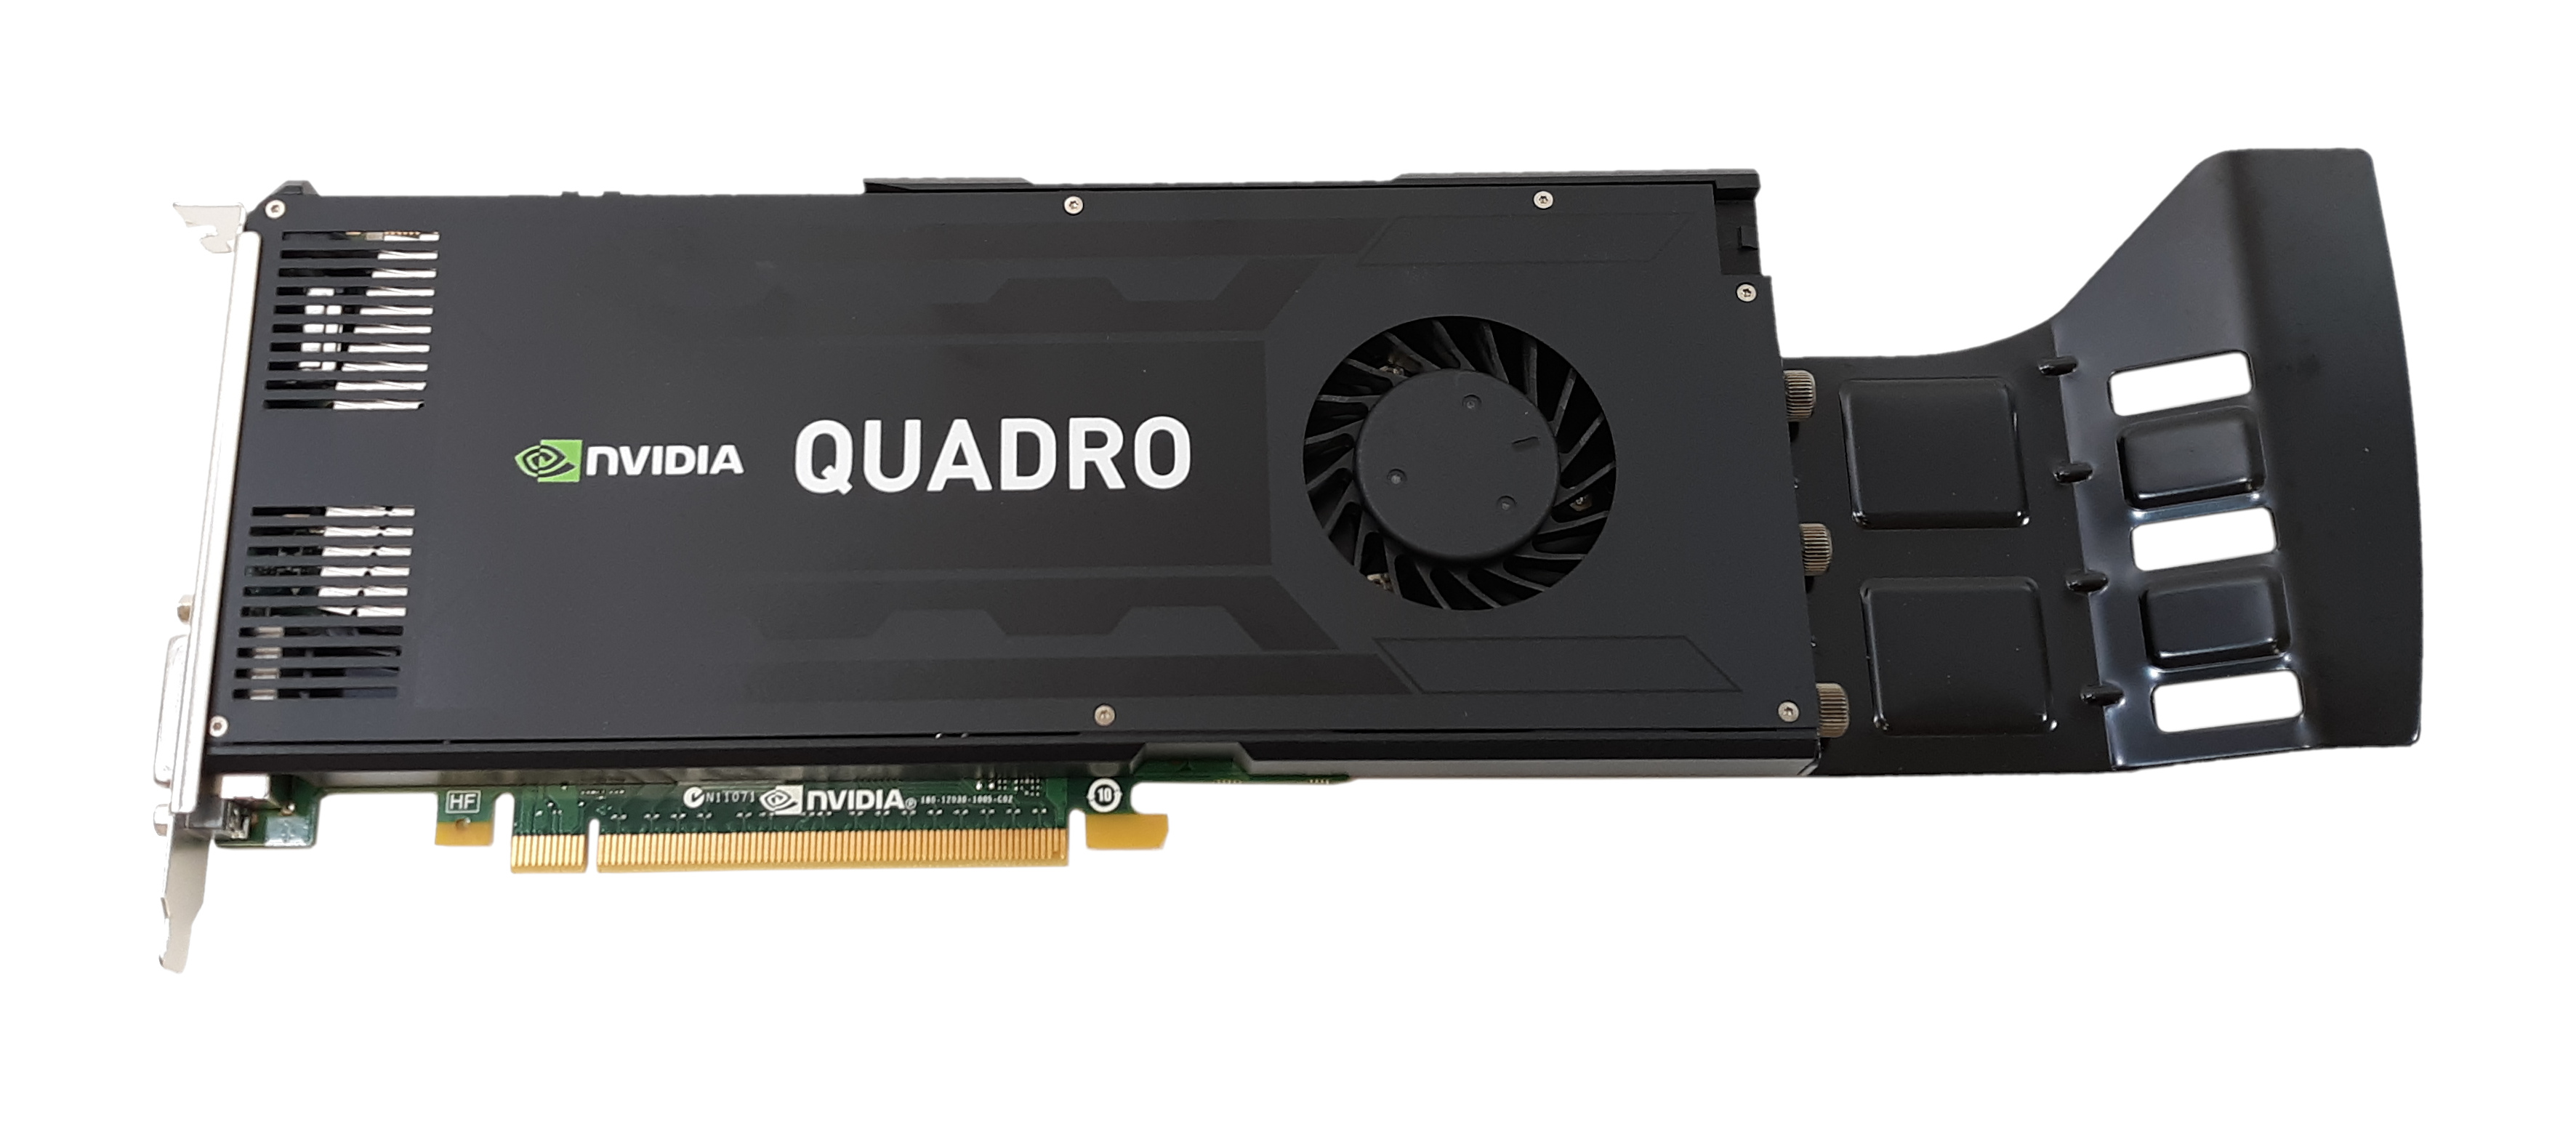 HP nVIDIA Quadro K4000 GPU 3GB PCIE x16 Dual DP/DVI 700104-001 713381-001 C2J94AT - Click Image to Close